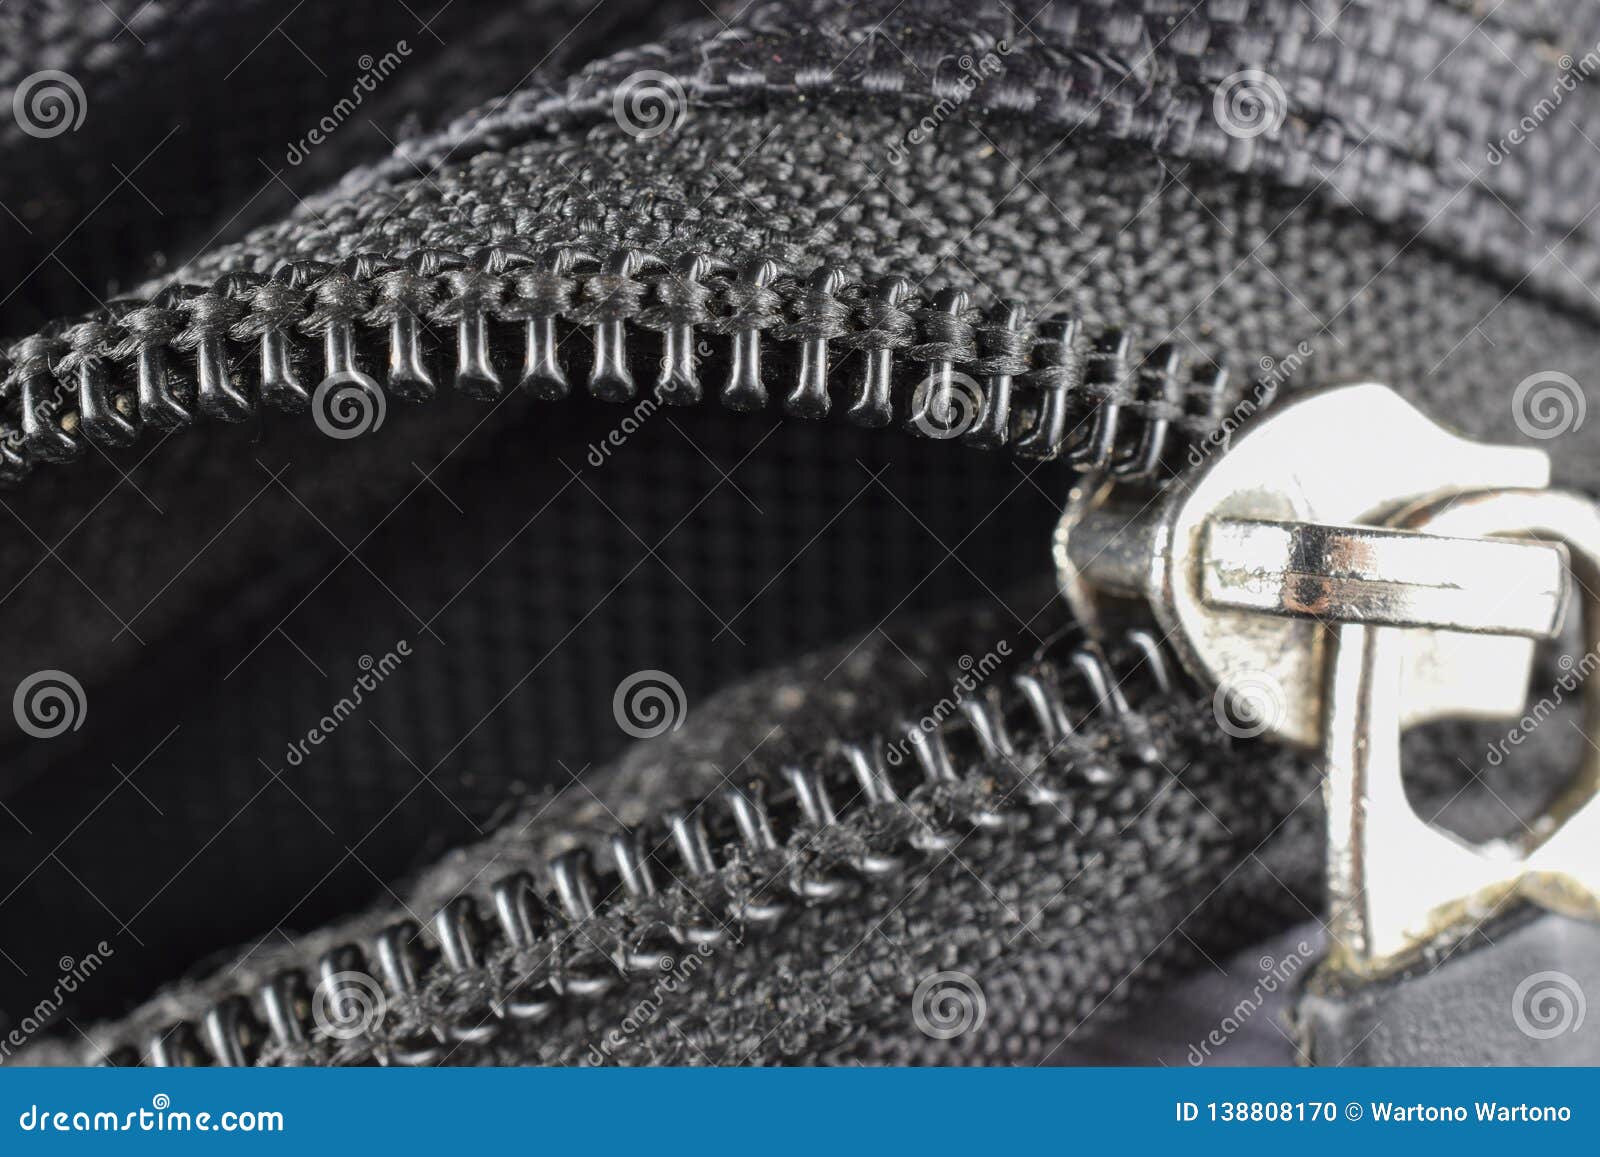 Closeup of a zipper stock photo. Image of leather, zipper - 138808170